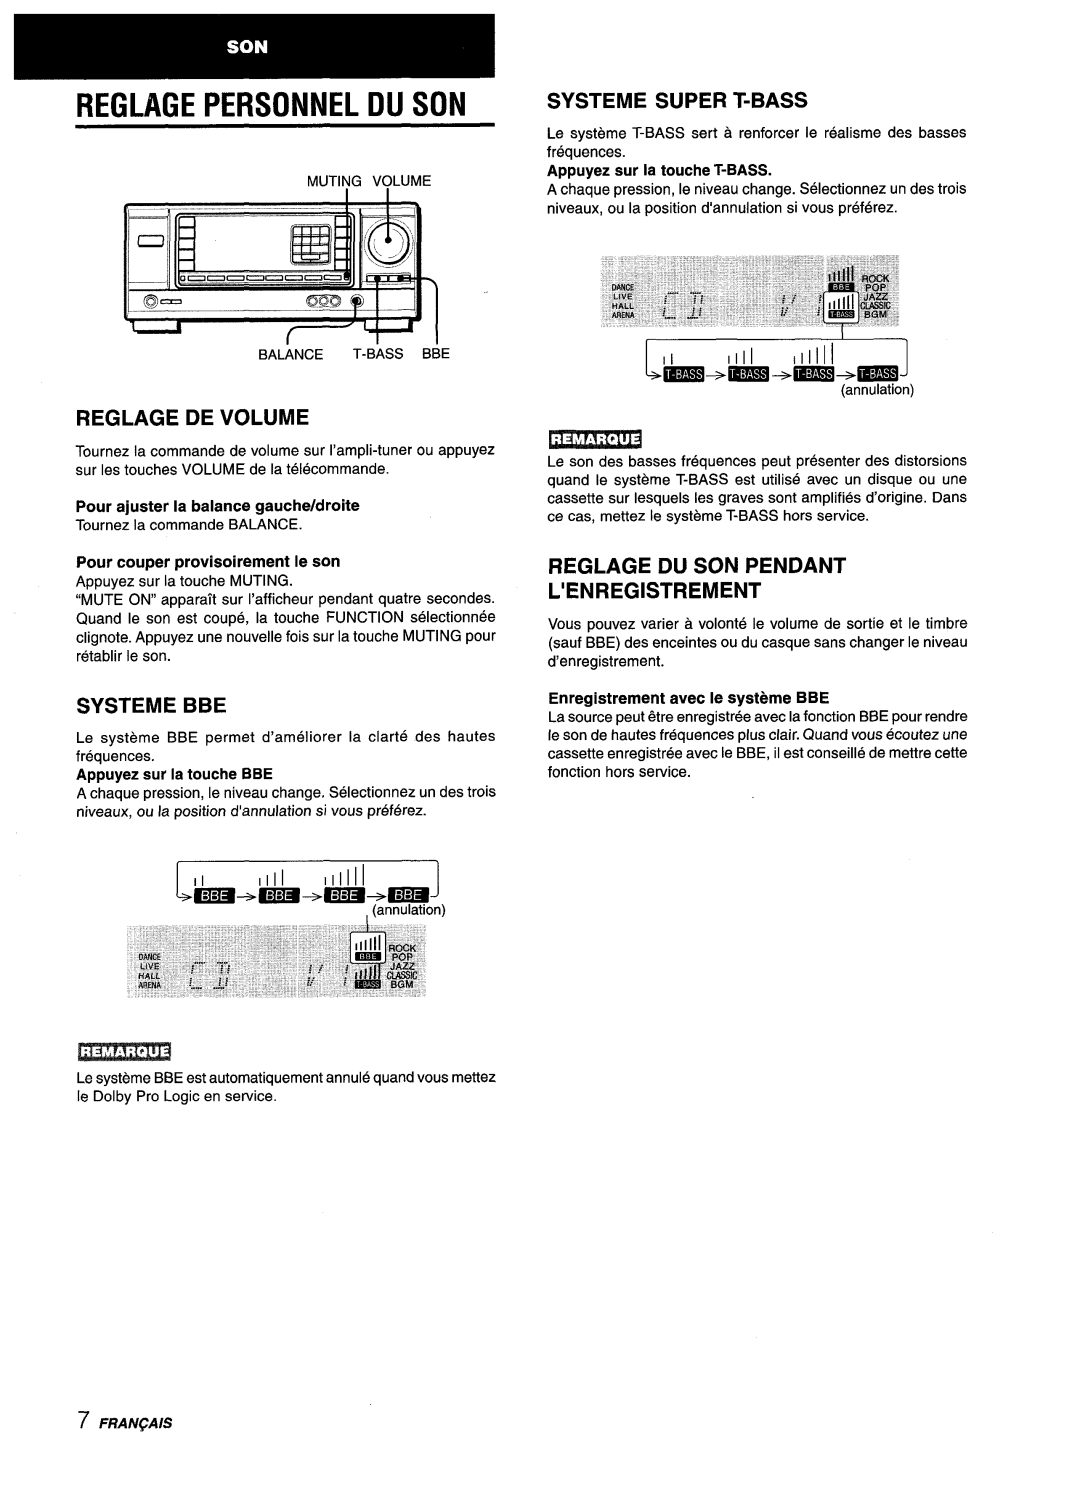 Aiwa AV-X220 manual Reglage Personnel Du Son, Wi ‘, Systeme Super T-Bass, Reglage De Volume, Systeme Bbe, 000”000000 